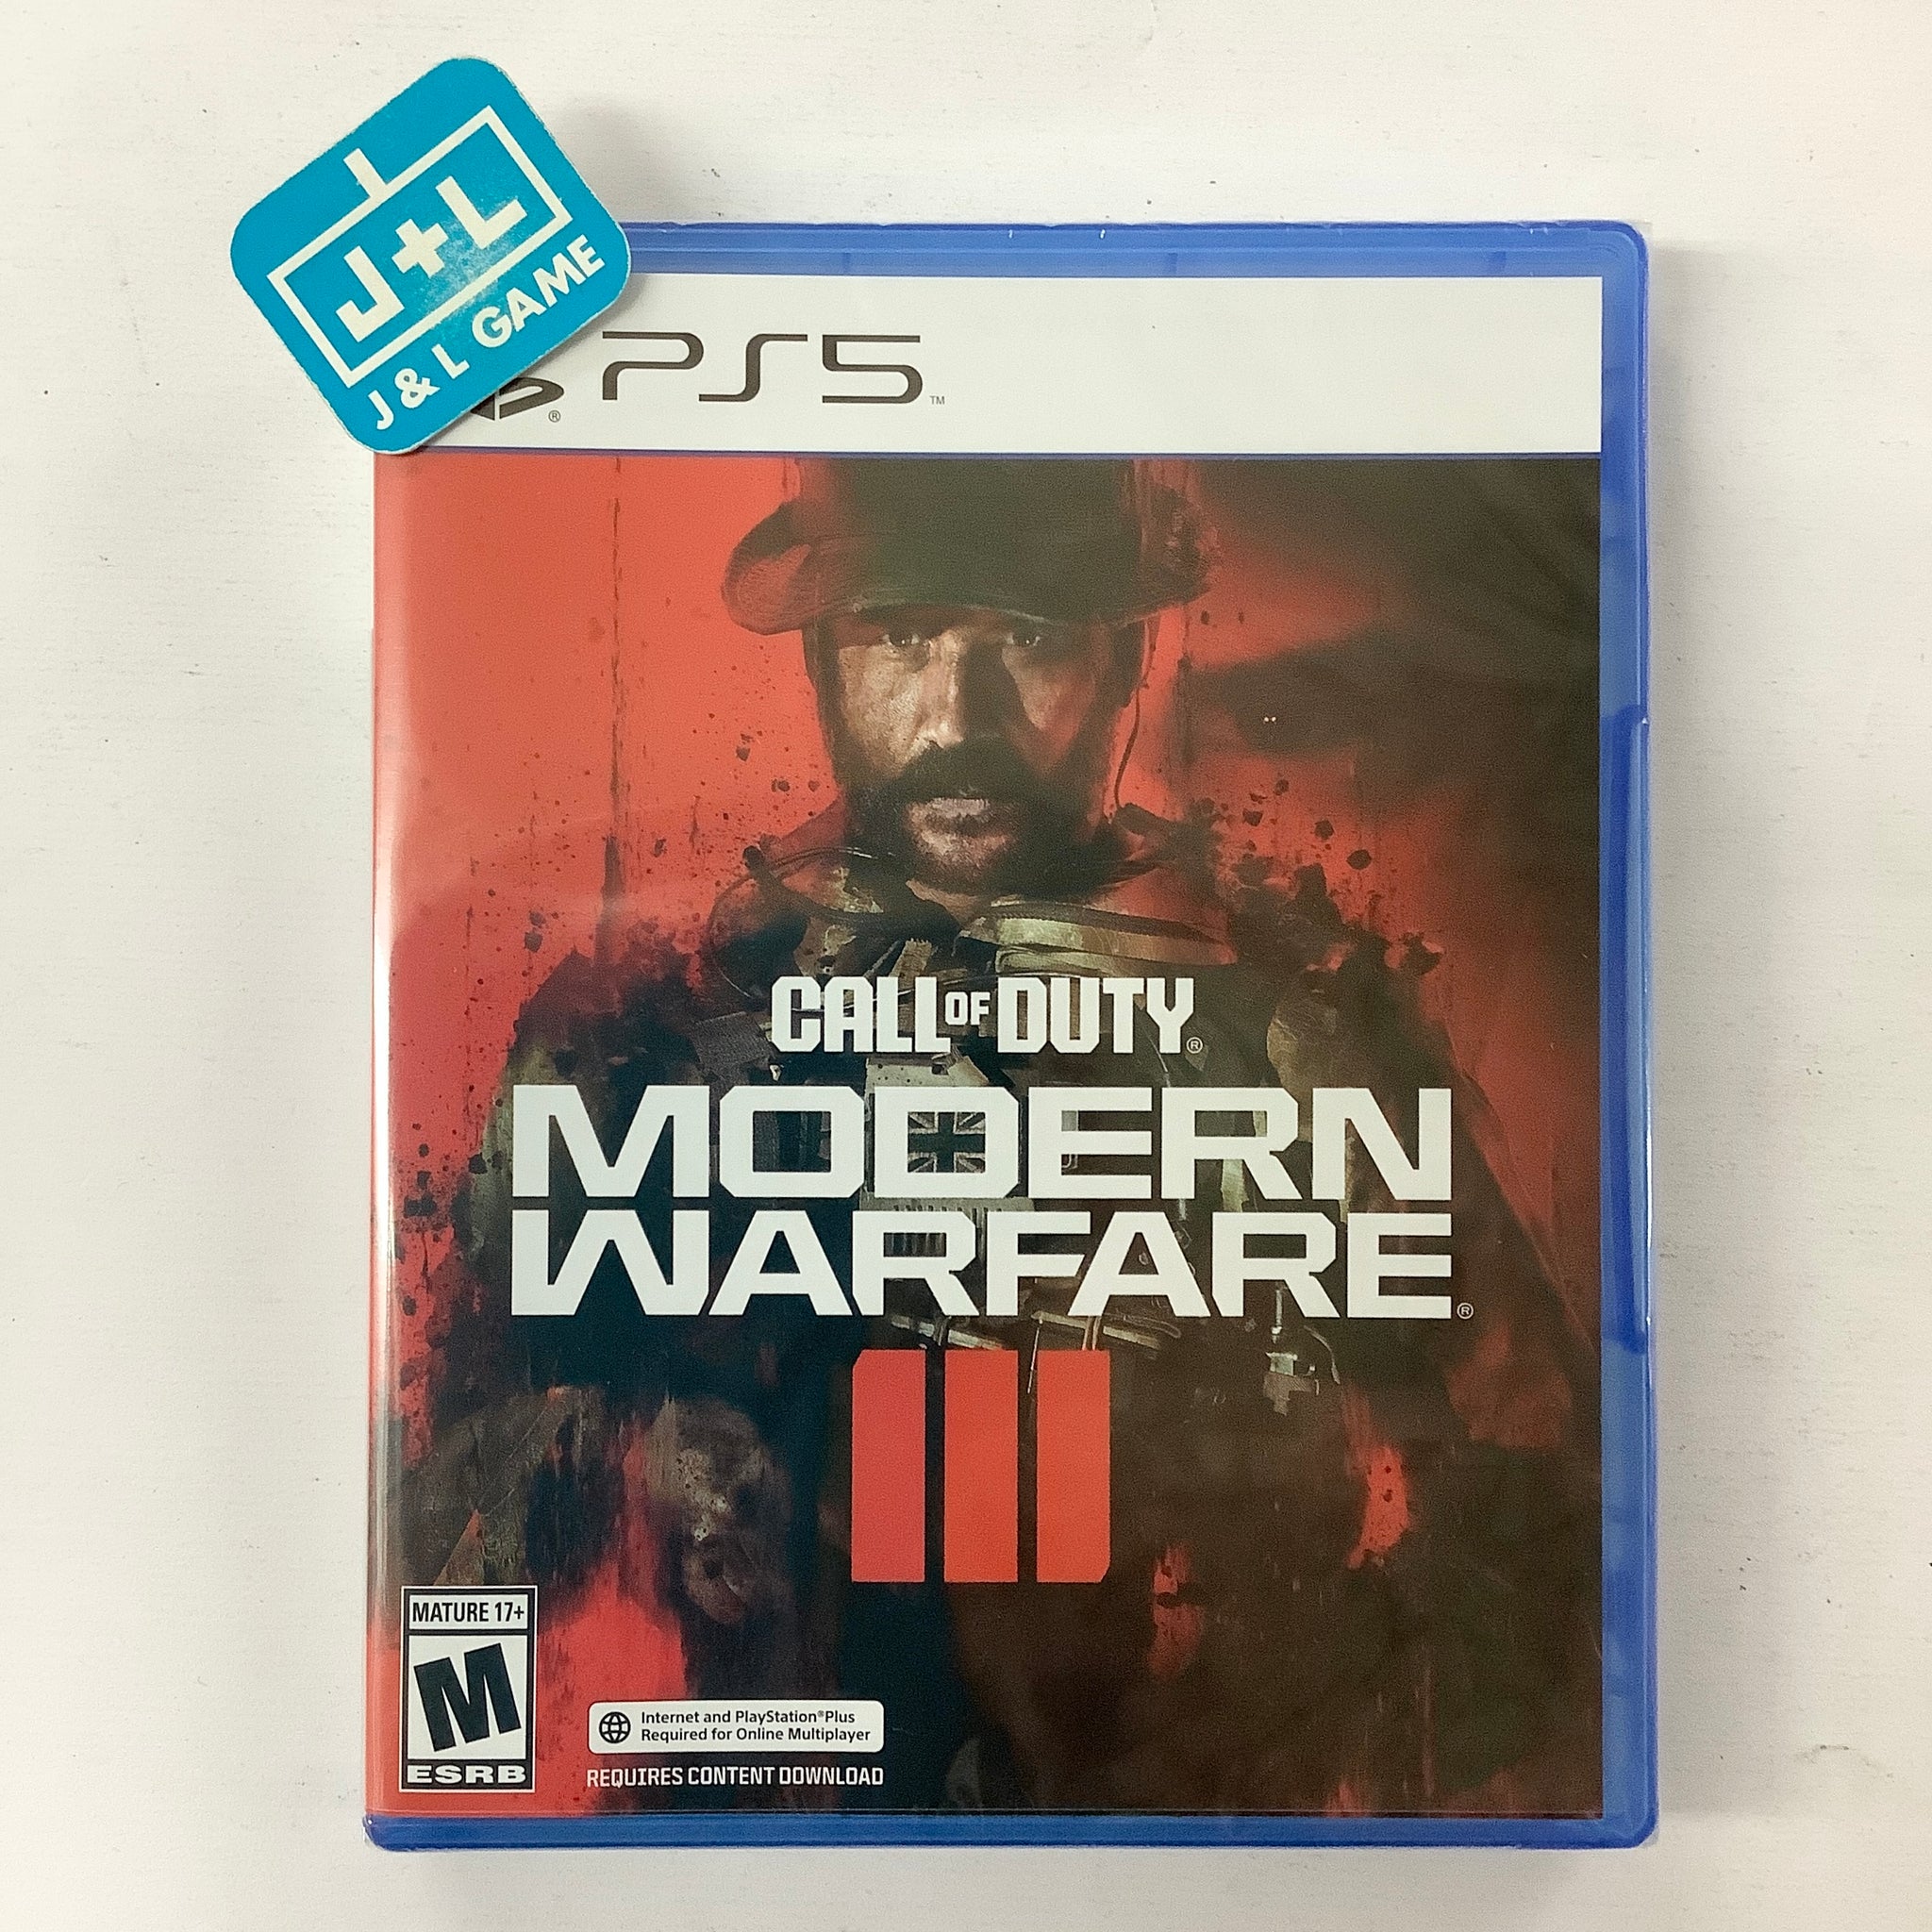 Call of Duty: Modern Warfare III - (PS5) PlayStation 5 – J&L Video Games  New York City, call of duty modern warfare iii ps5 